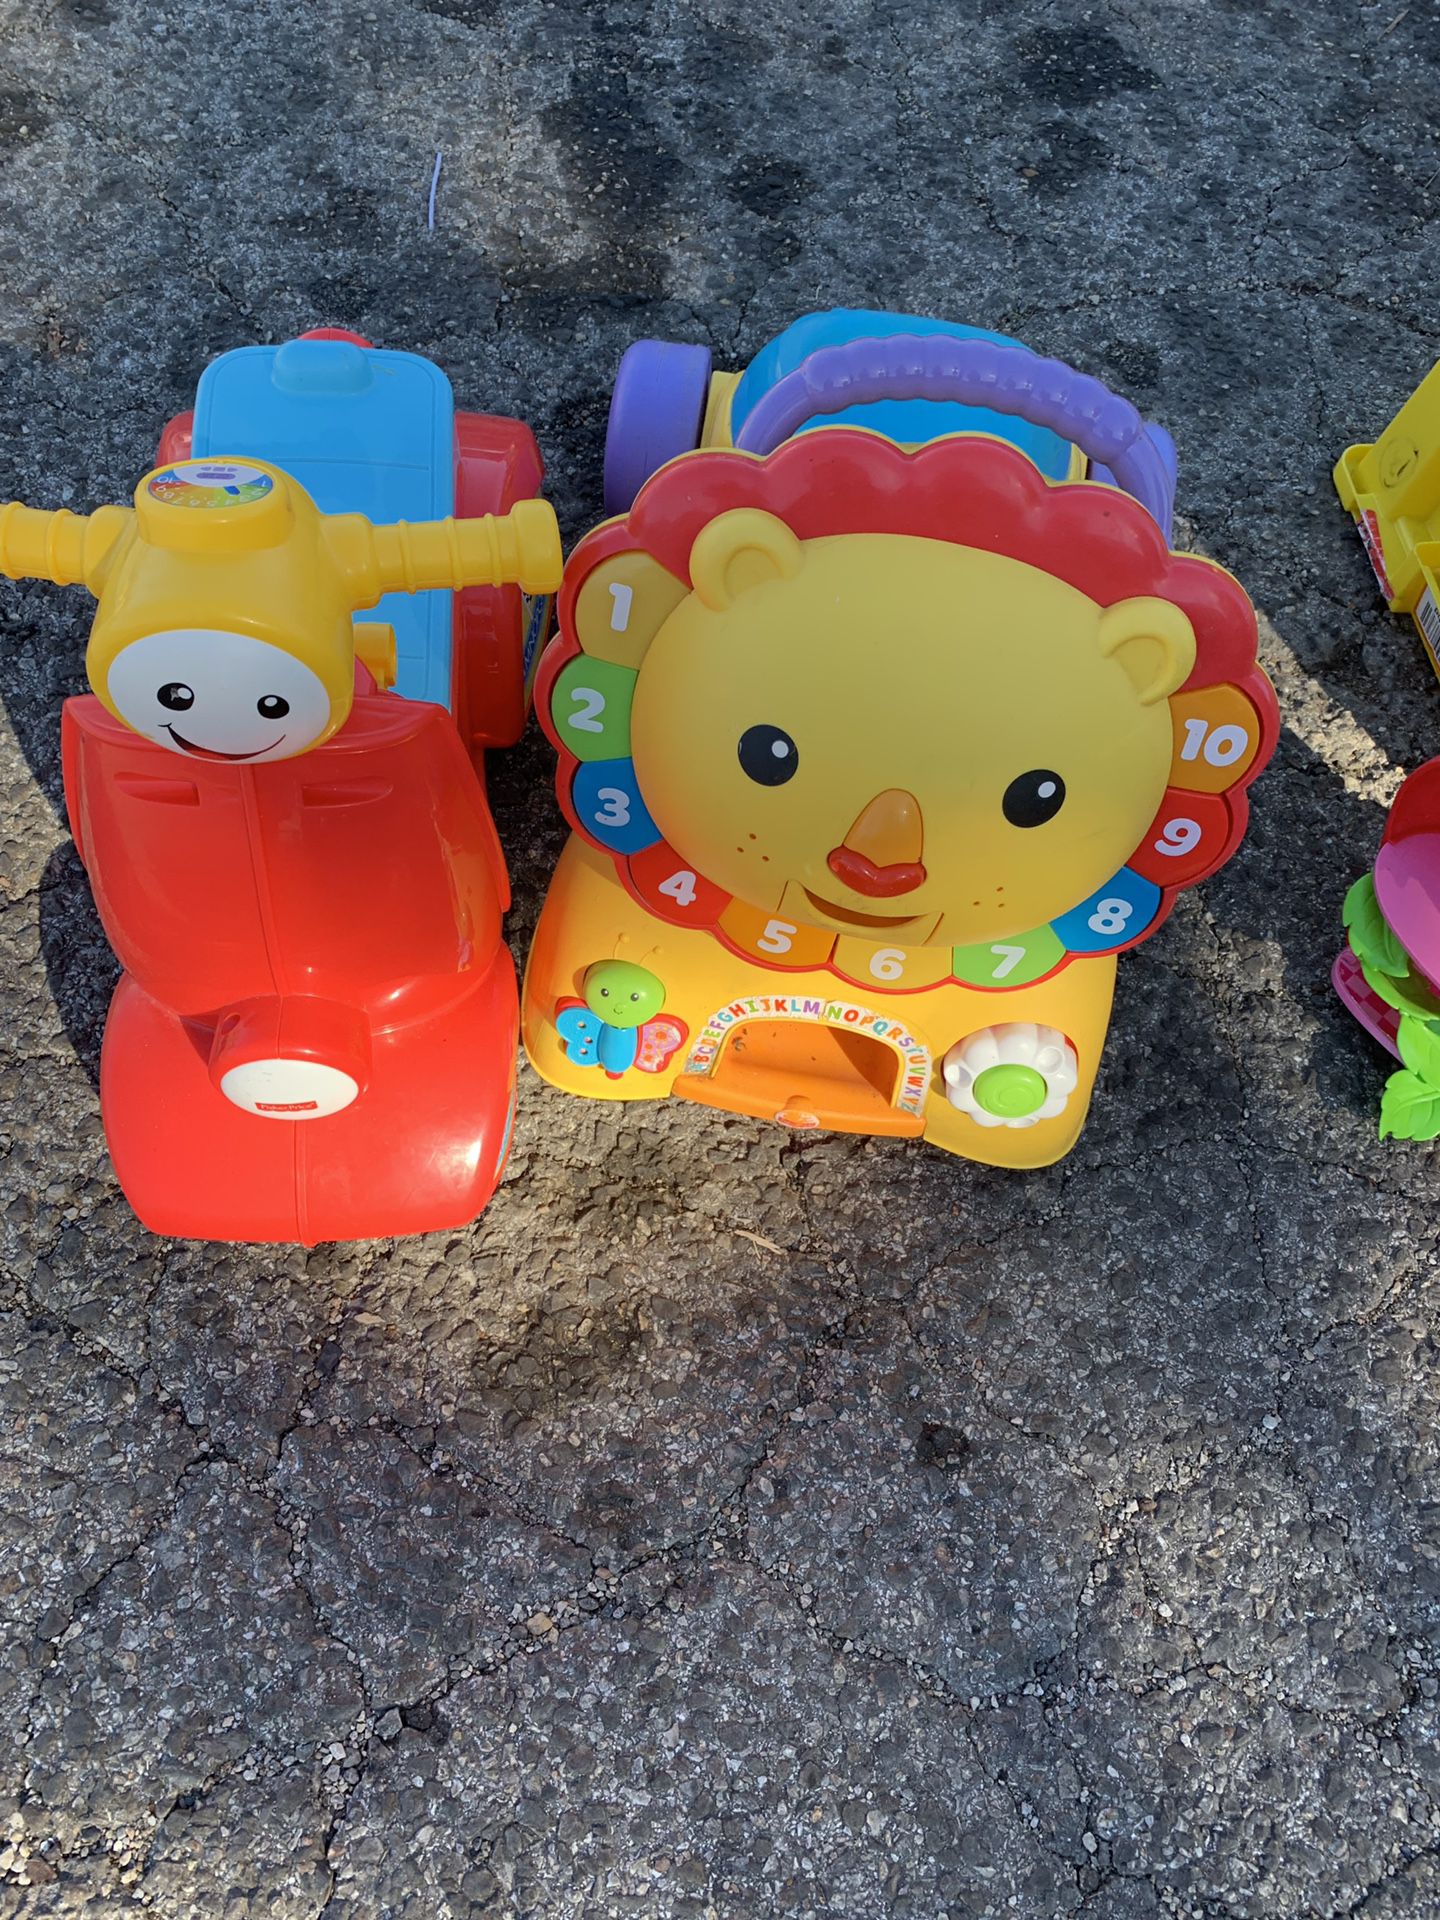 Kids riding toys